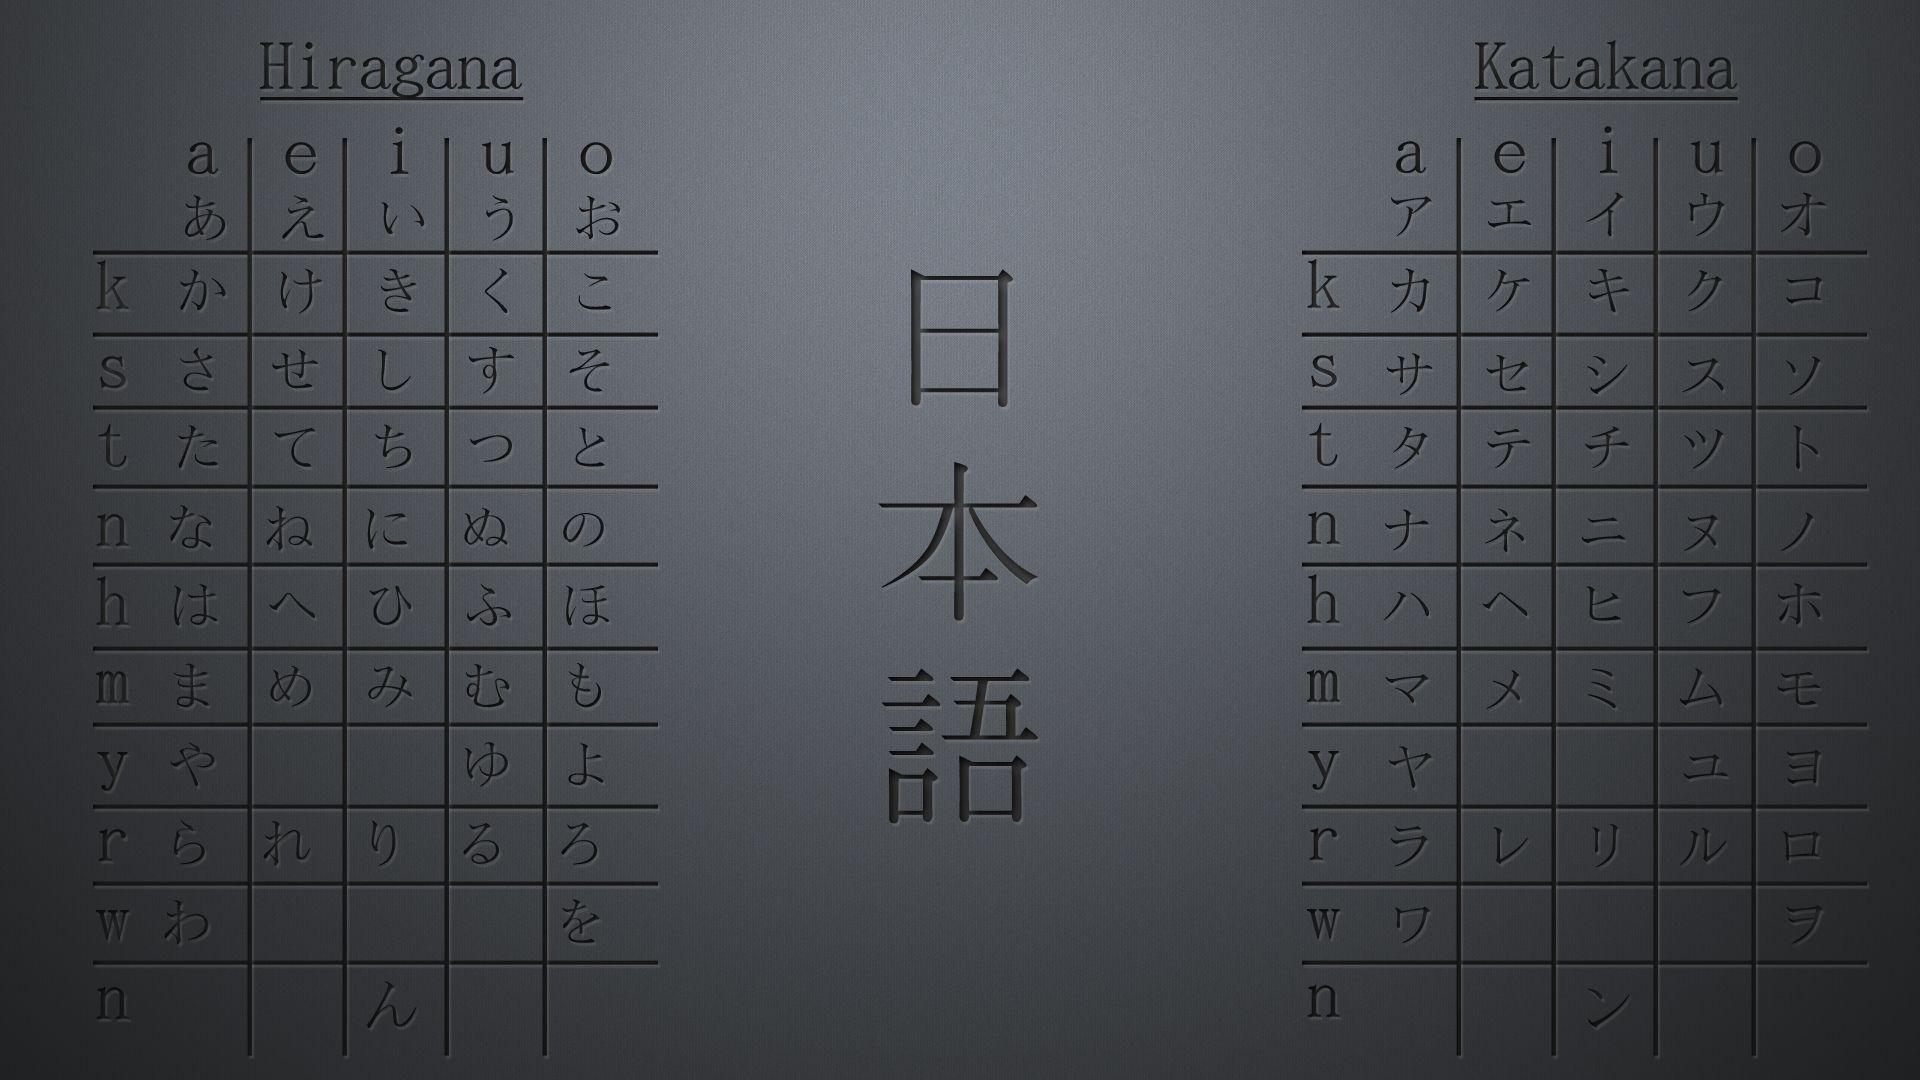 Katakana HD Wallpaper and Background Image